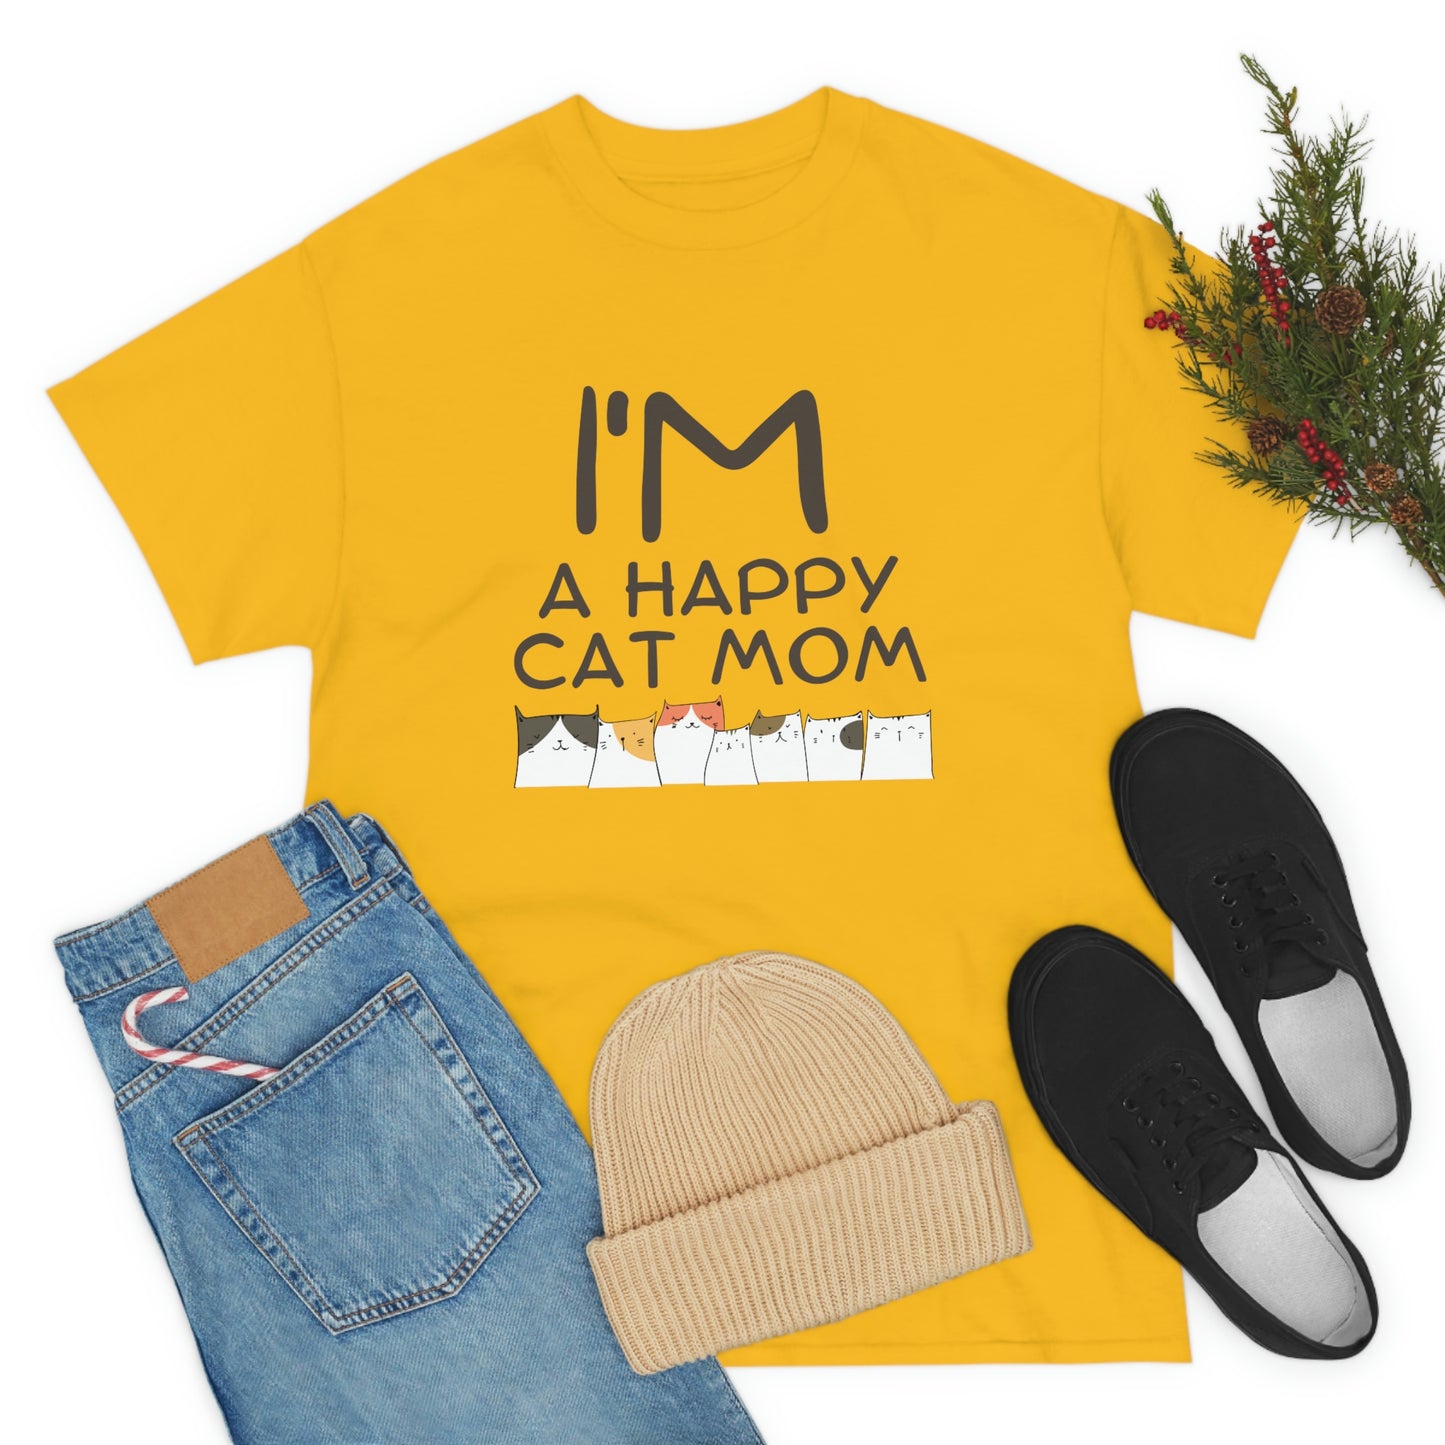 I'M A HAPPY CAT MOM design Graphic tee shirt